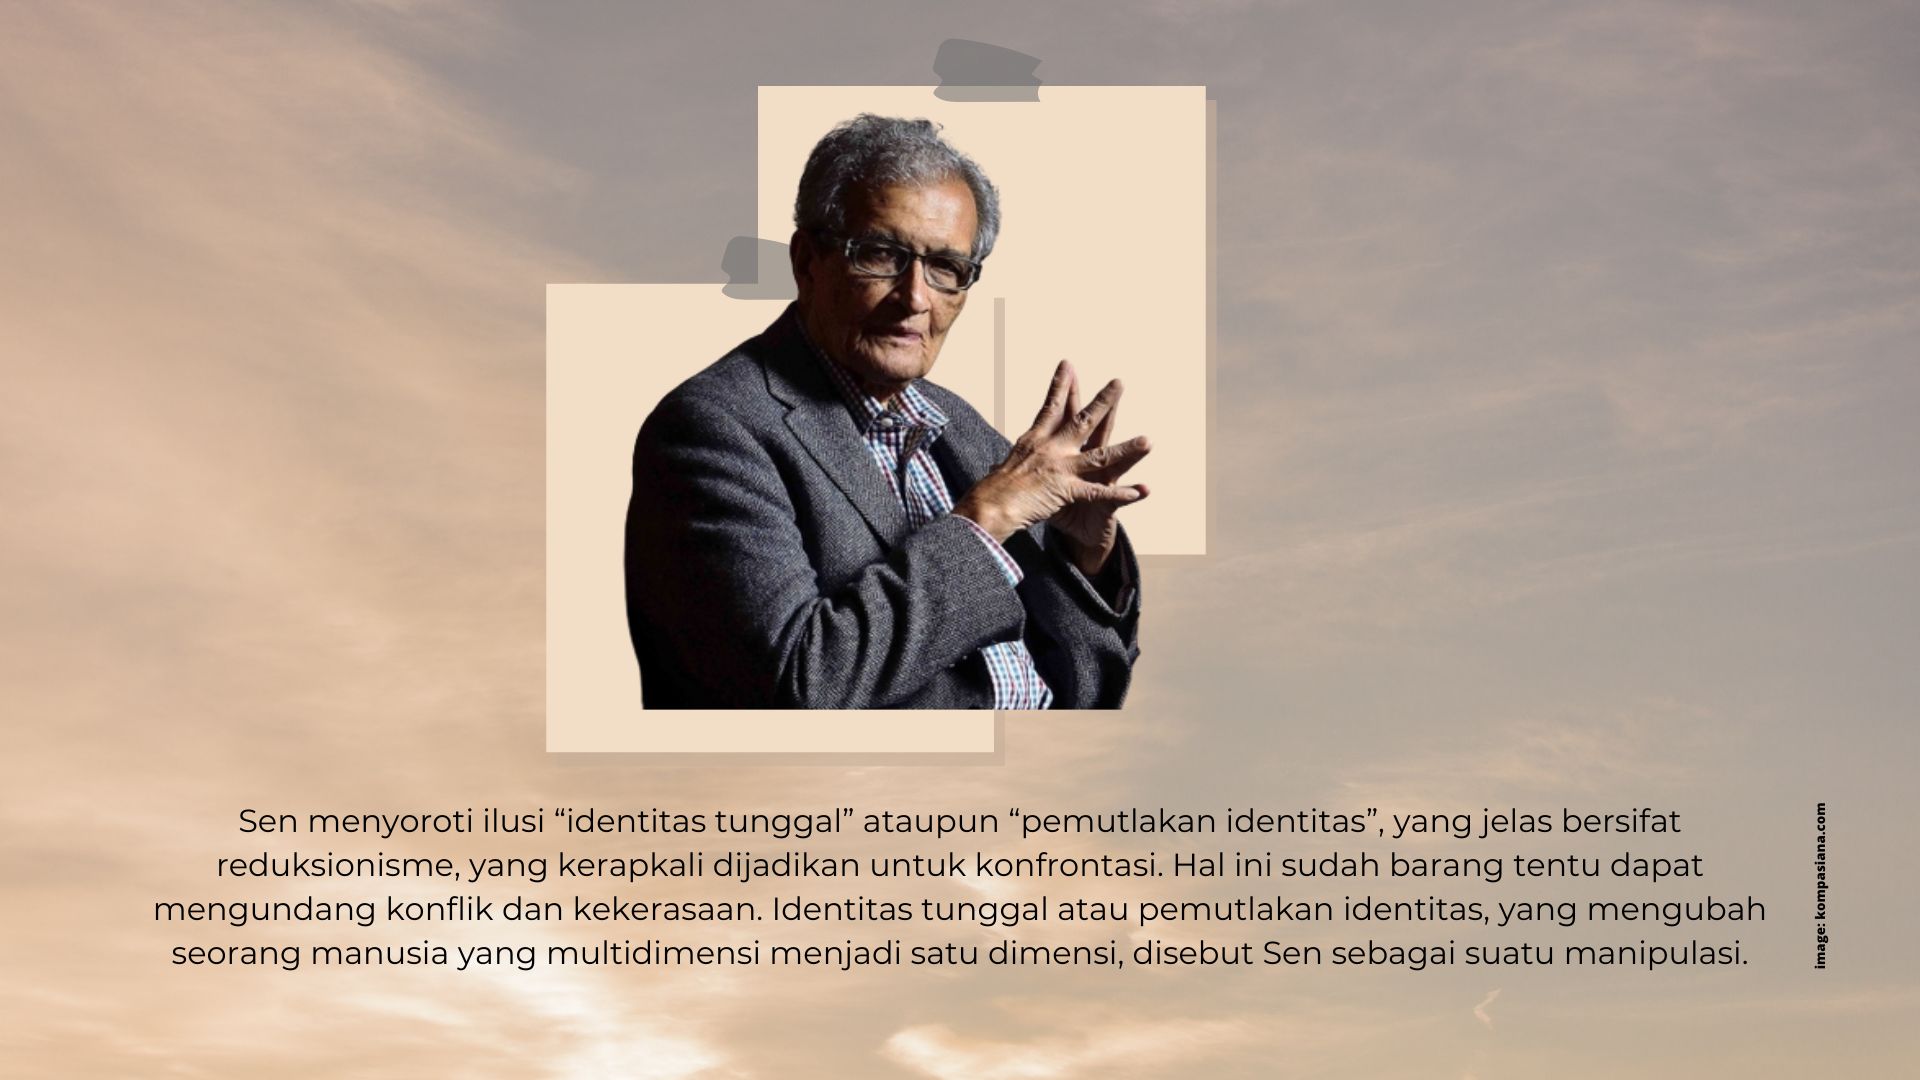 Persoalan Identitas dalam Kacamata Amartya Sen